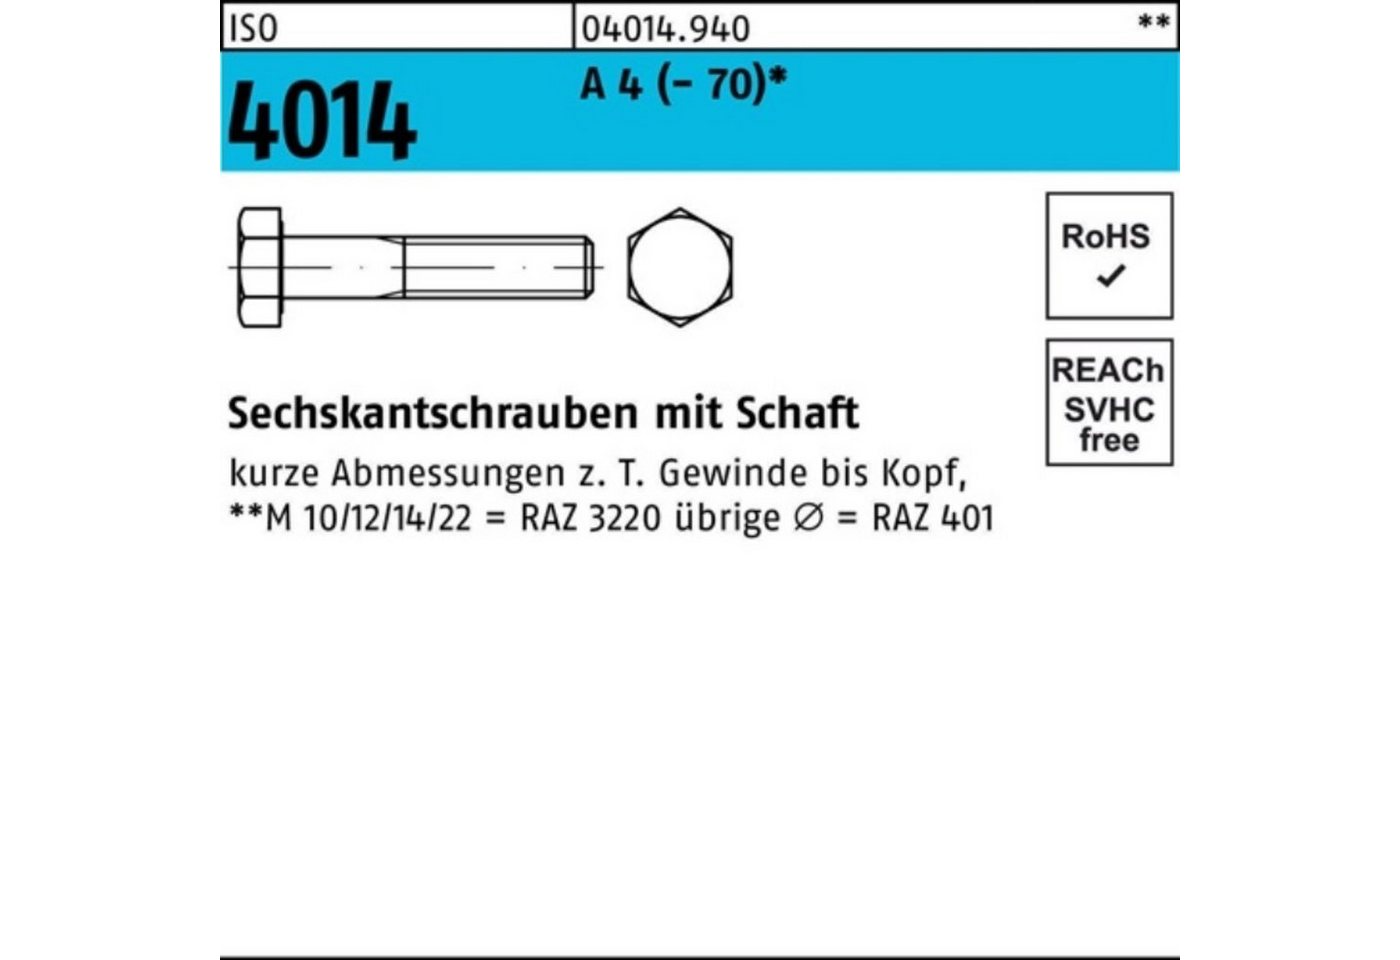 Bufab Sechskantschraube 100er Pack Sechskantschraube ISO 4014 Schaft M16x 130 A 4 (70) 1 St von Bufab